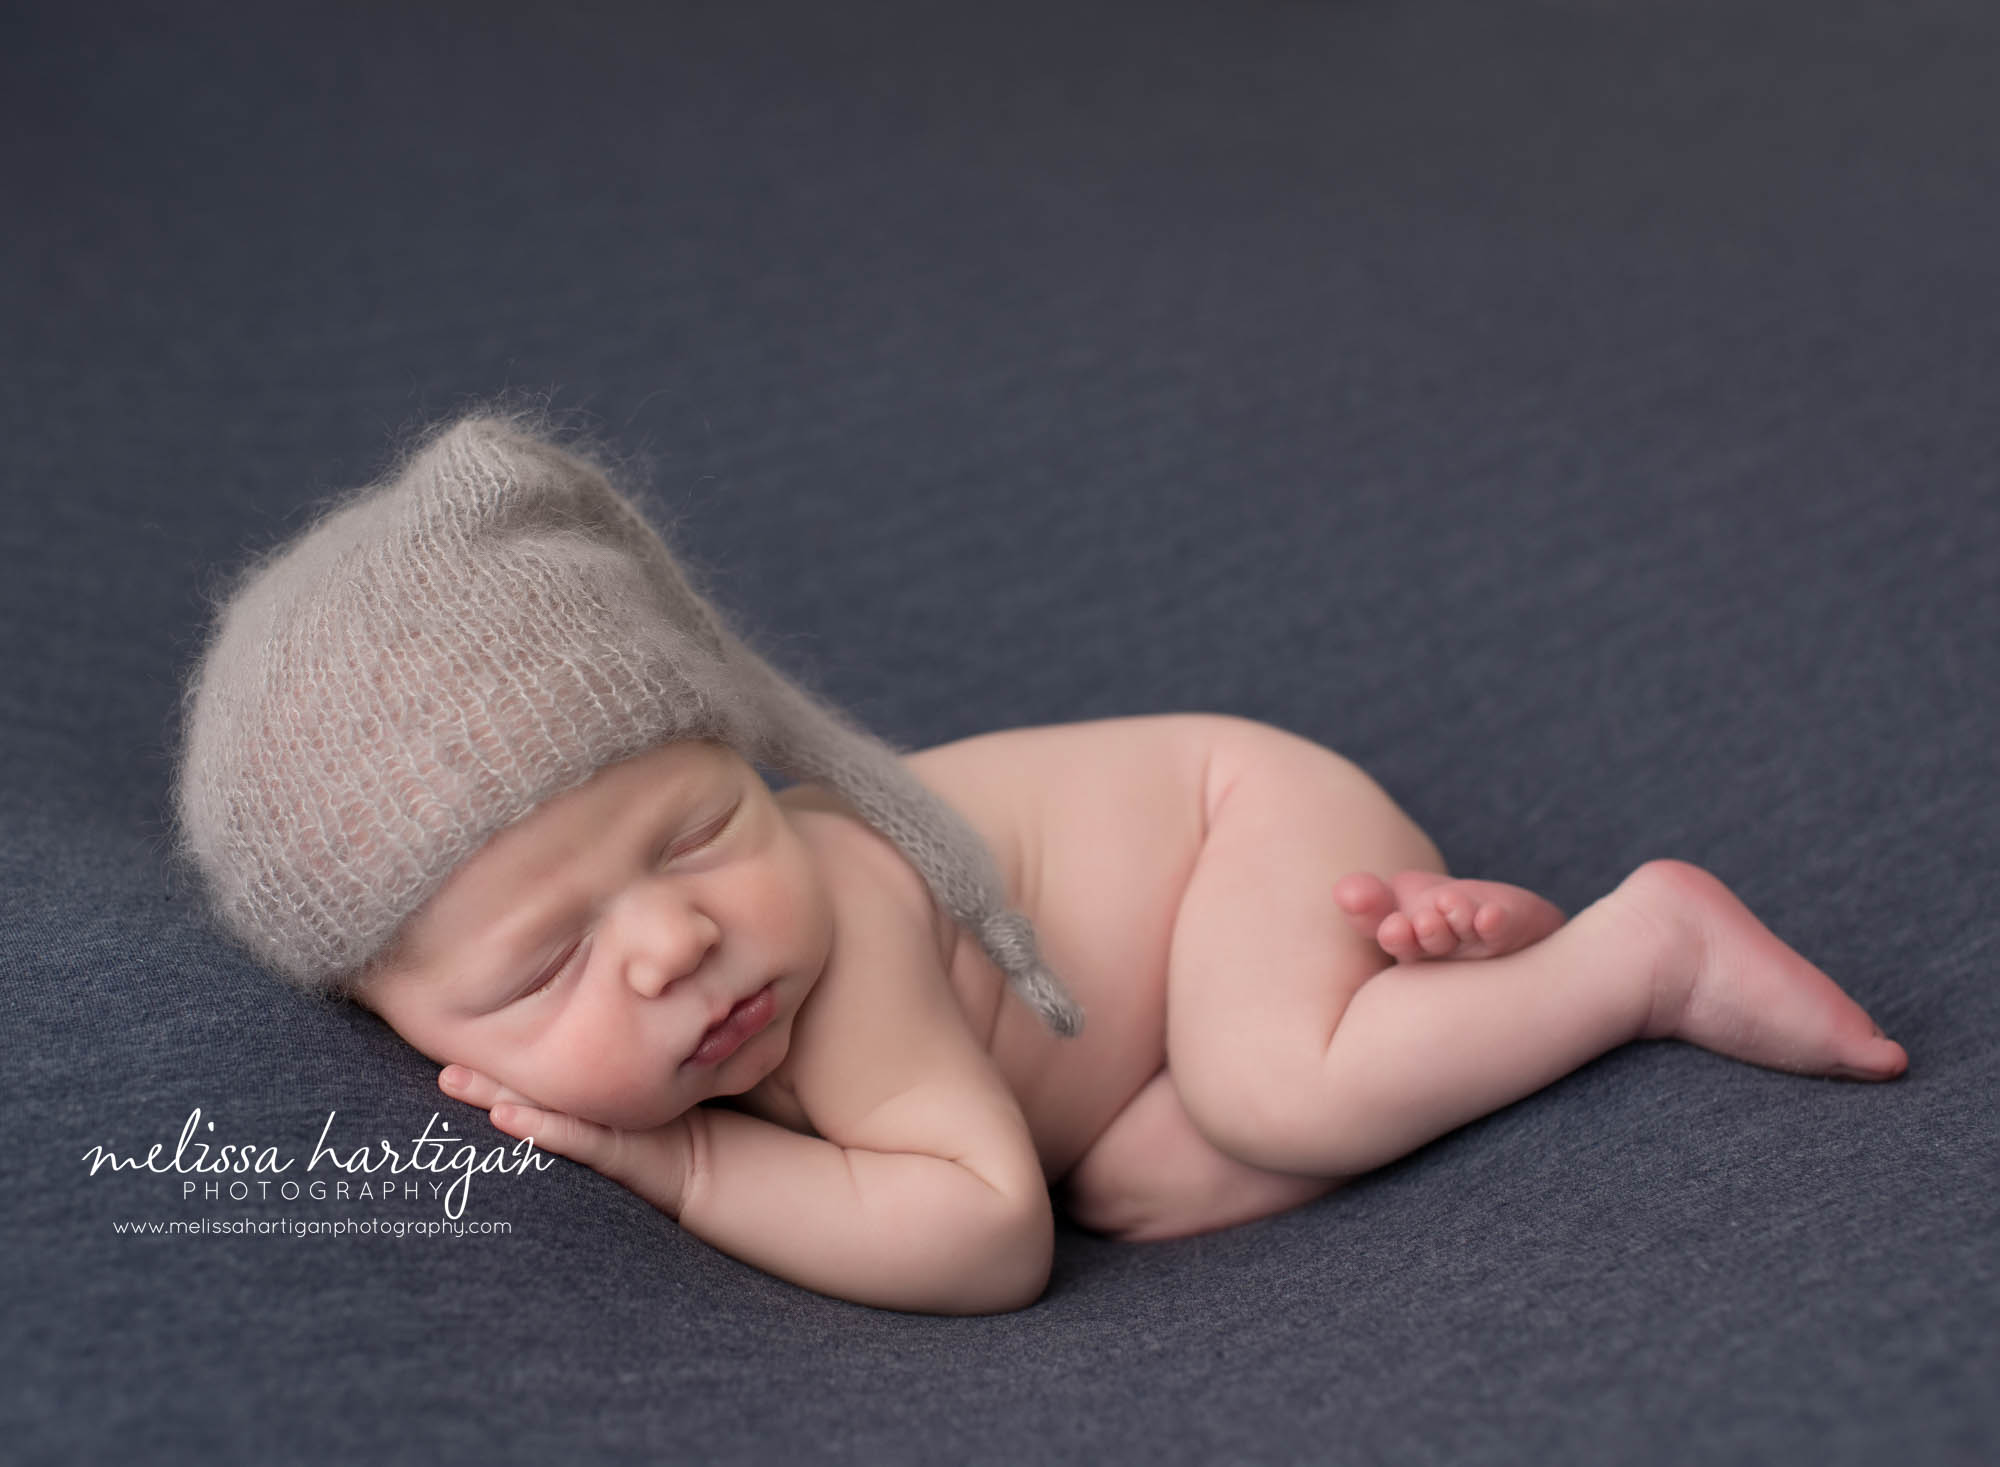 newborn baby boy posed on tummy with hand under cheek wearing gray sleepy cap